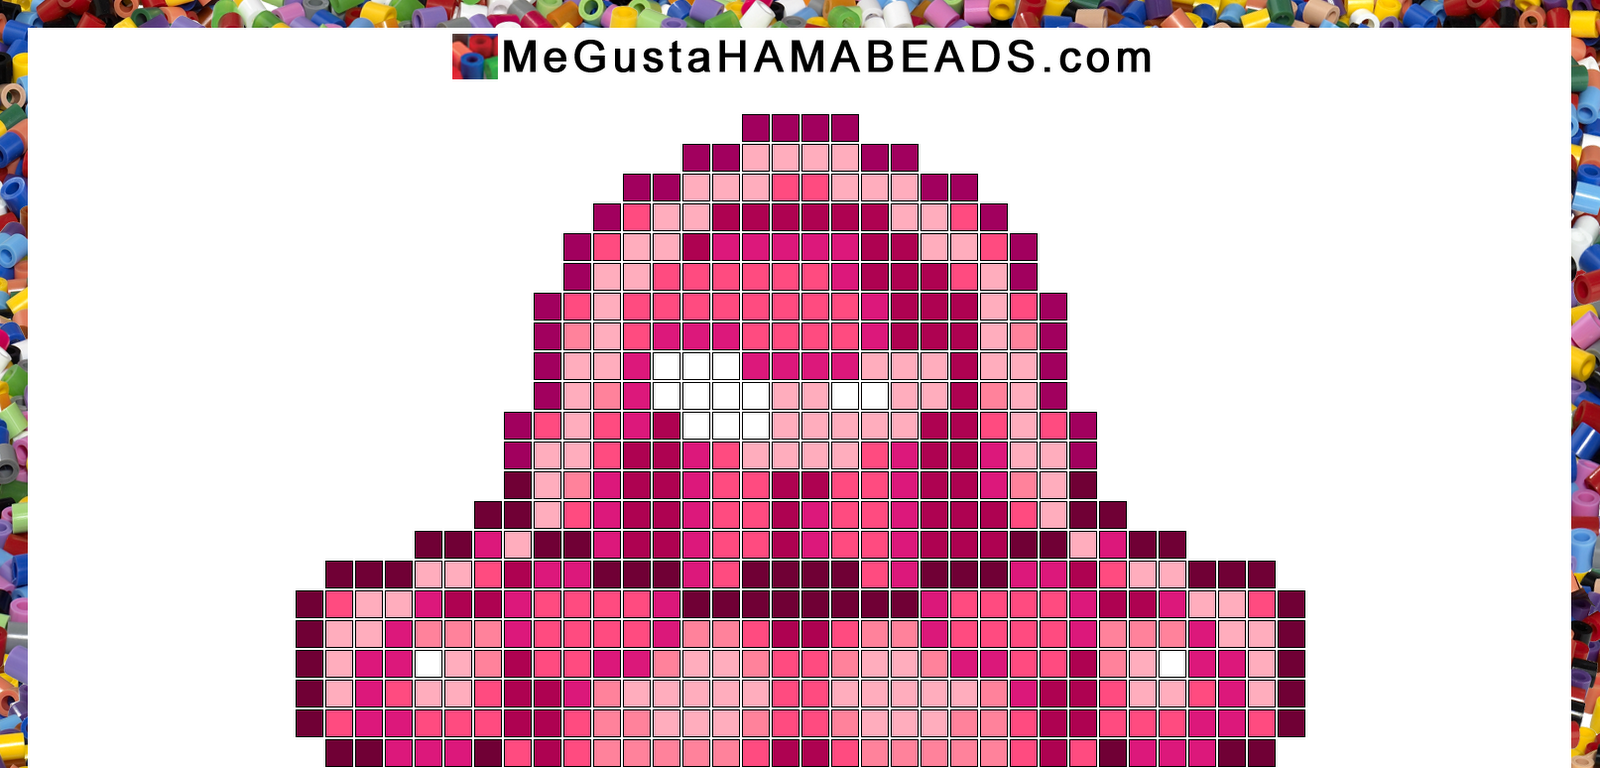  Hama Beads Plantillas Marvel Parte 5